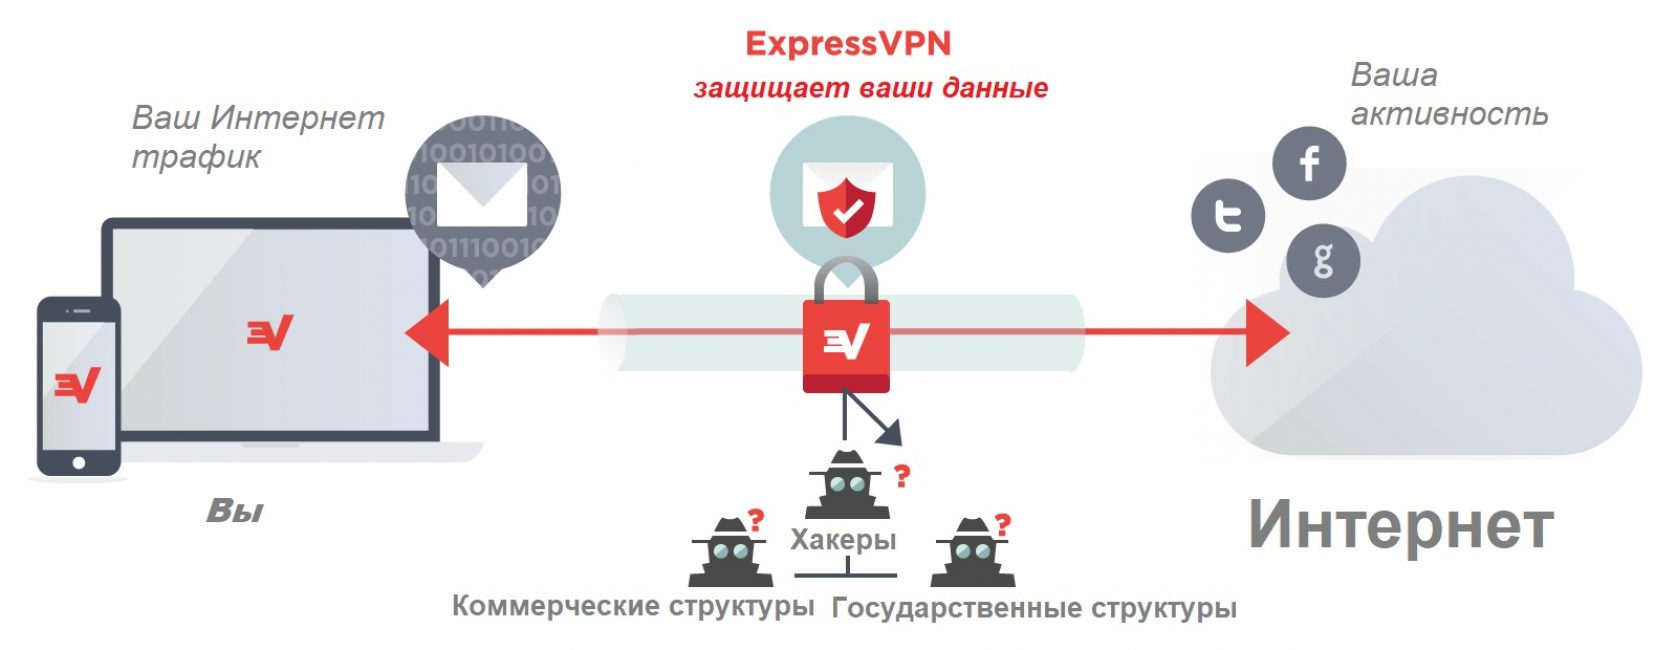 Схема работы VPN сервиса